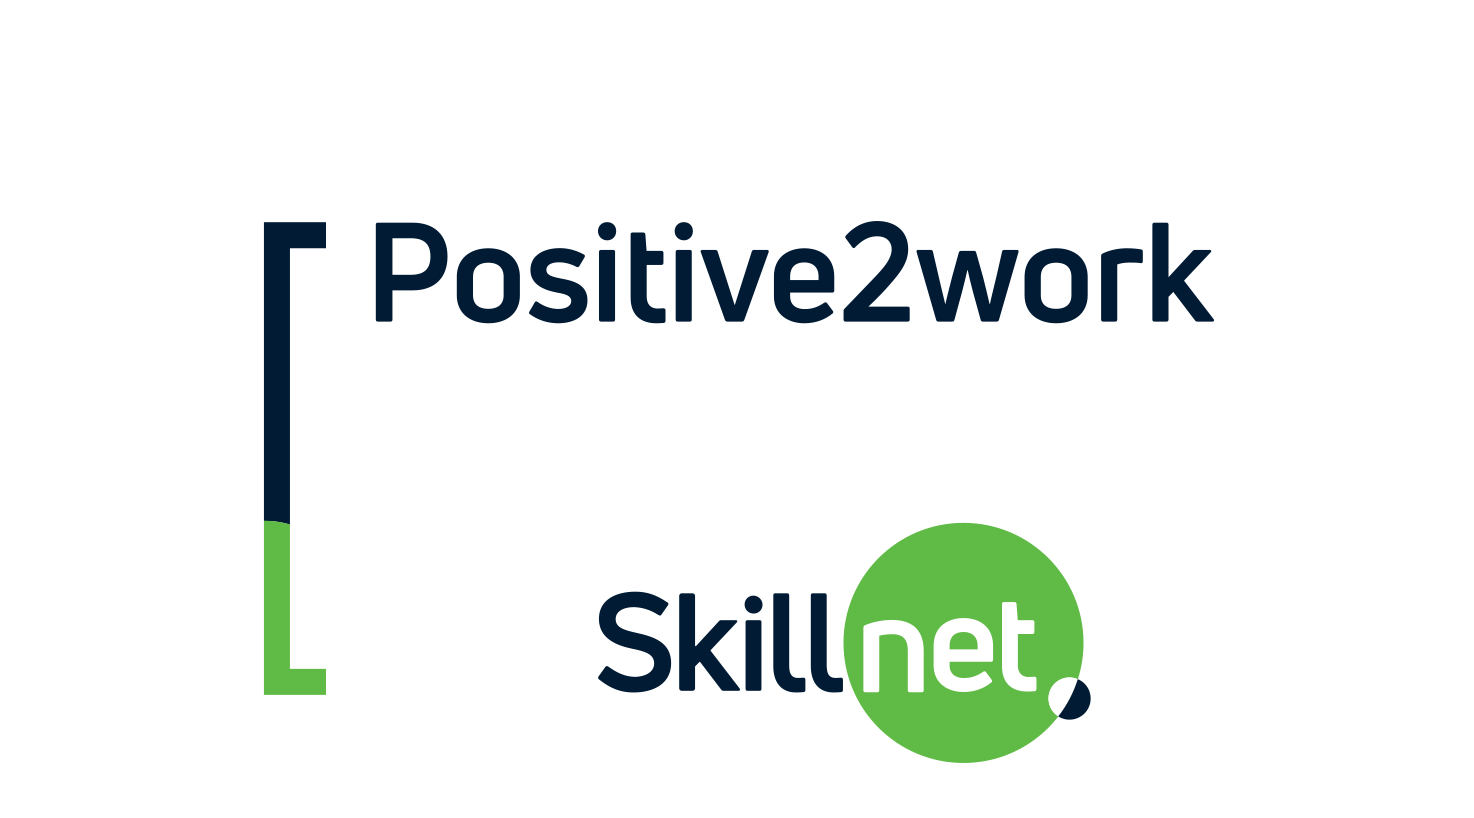 Positive2Work Skillnet